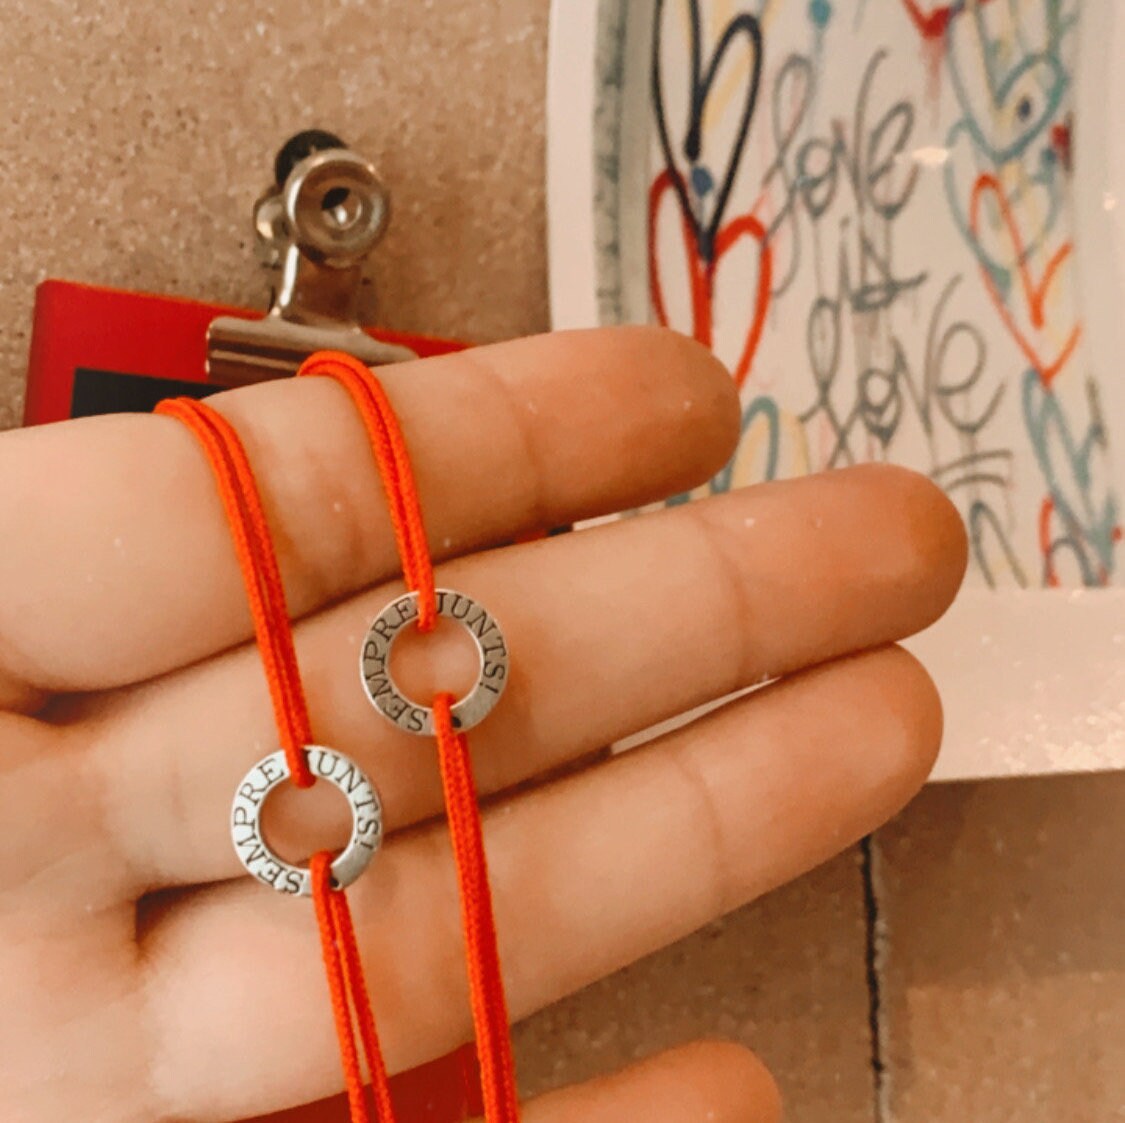 silver and adjustable bracelet \u00b7 Red thread thread of silver destiny bracelet Red thread destiny